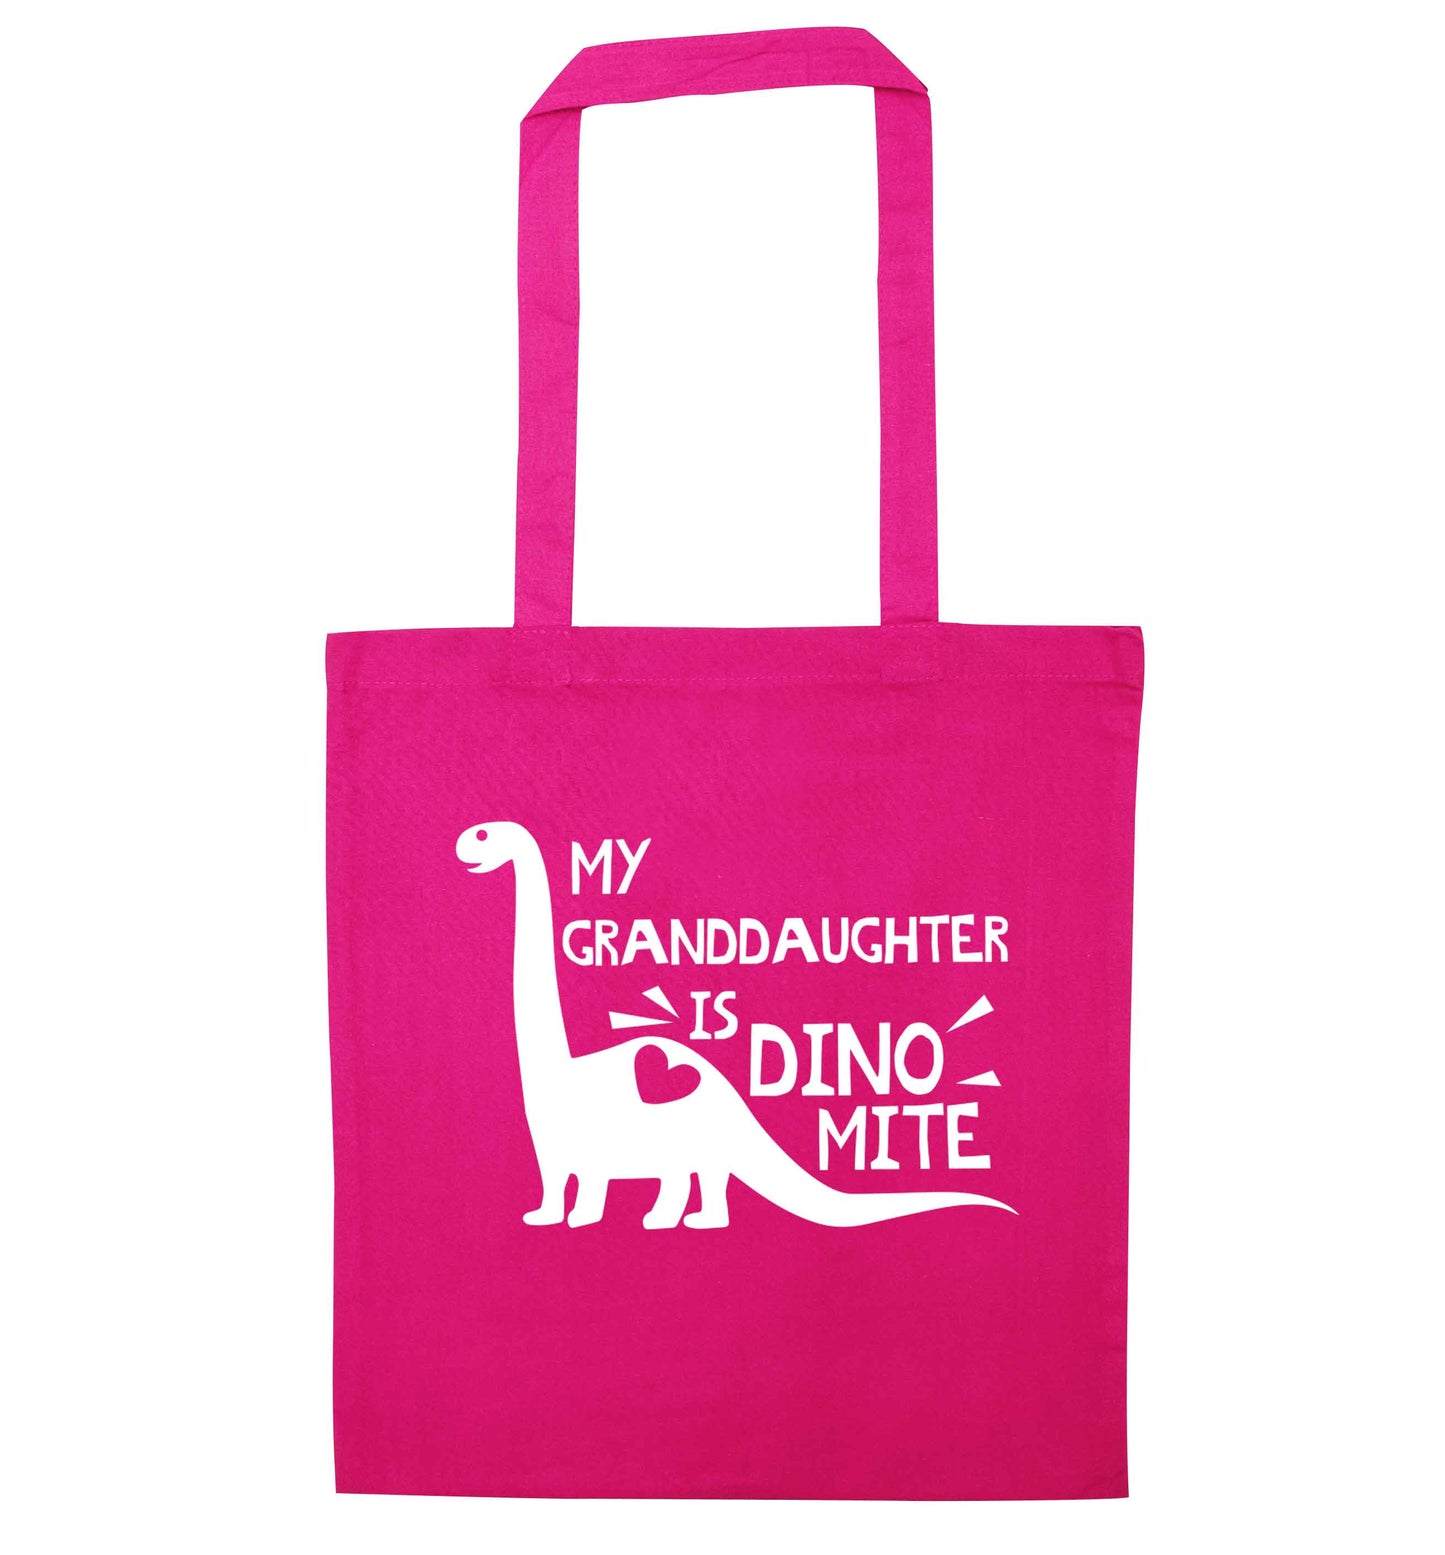 My granddaughter is dinomite! pink tote bag